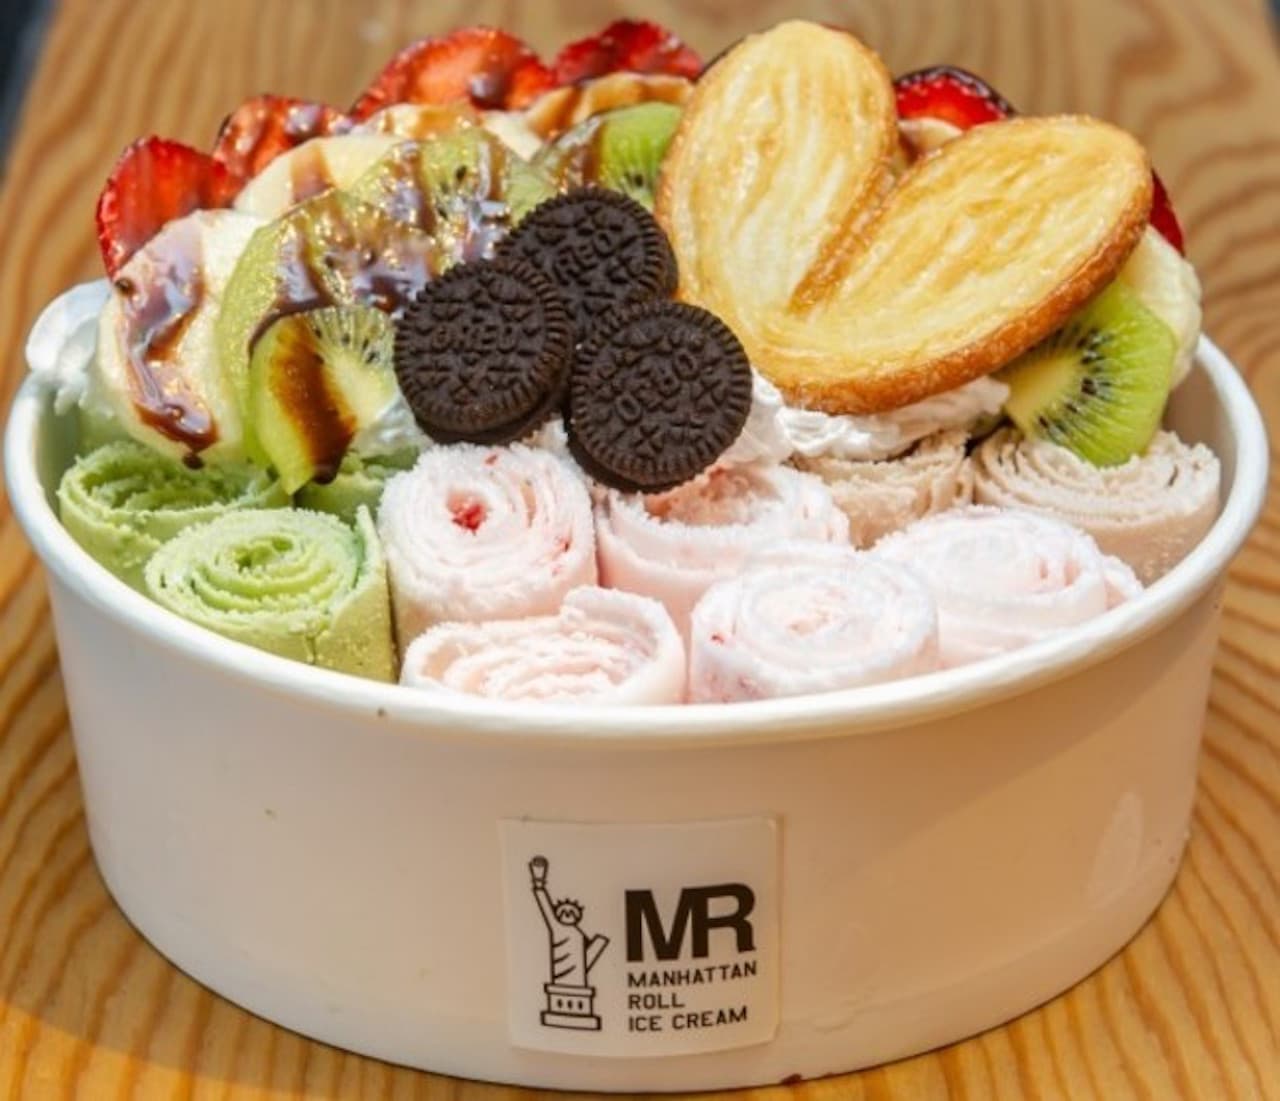 Opened "Manhattan Roll Ice Cream" at Cake.jp